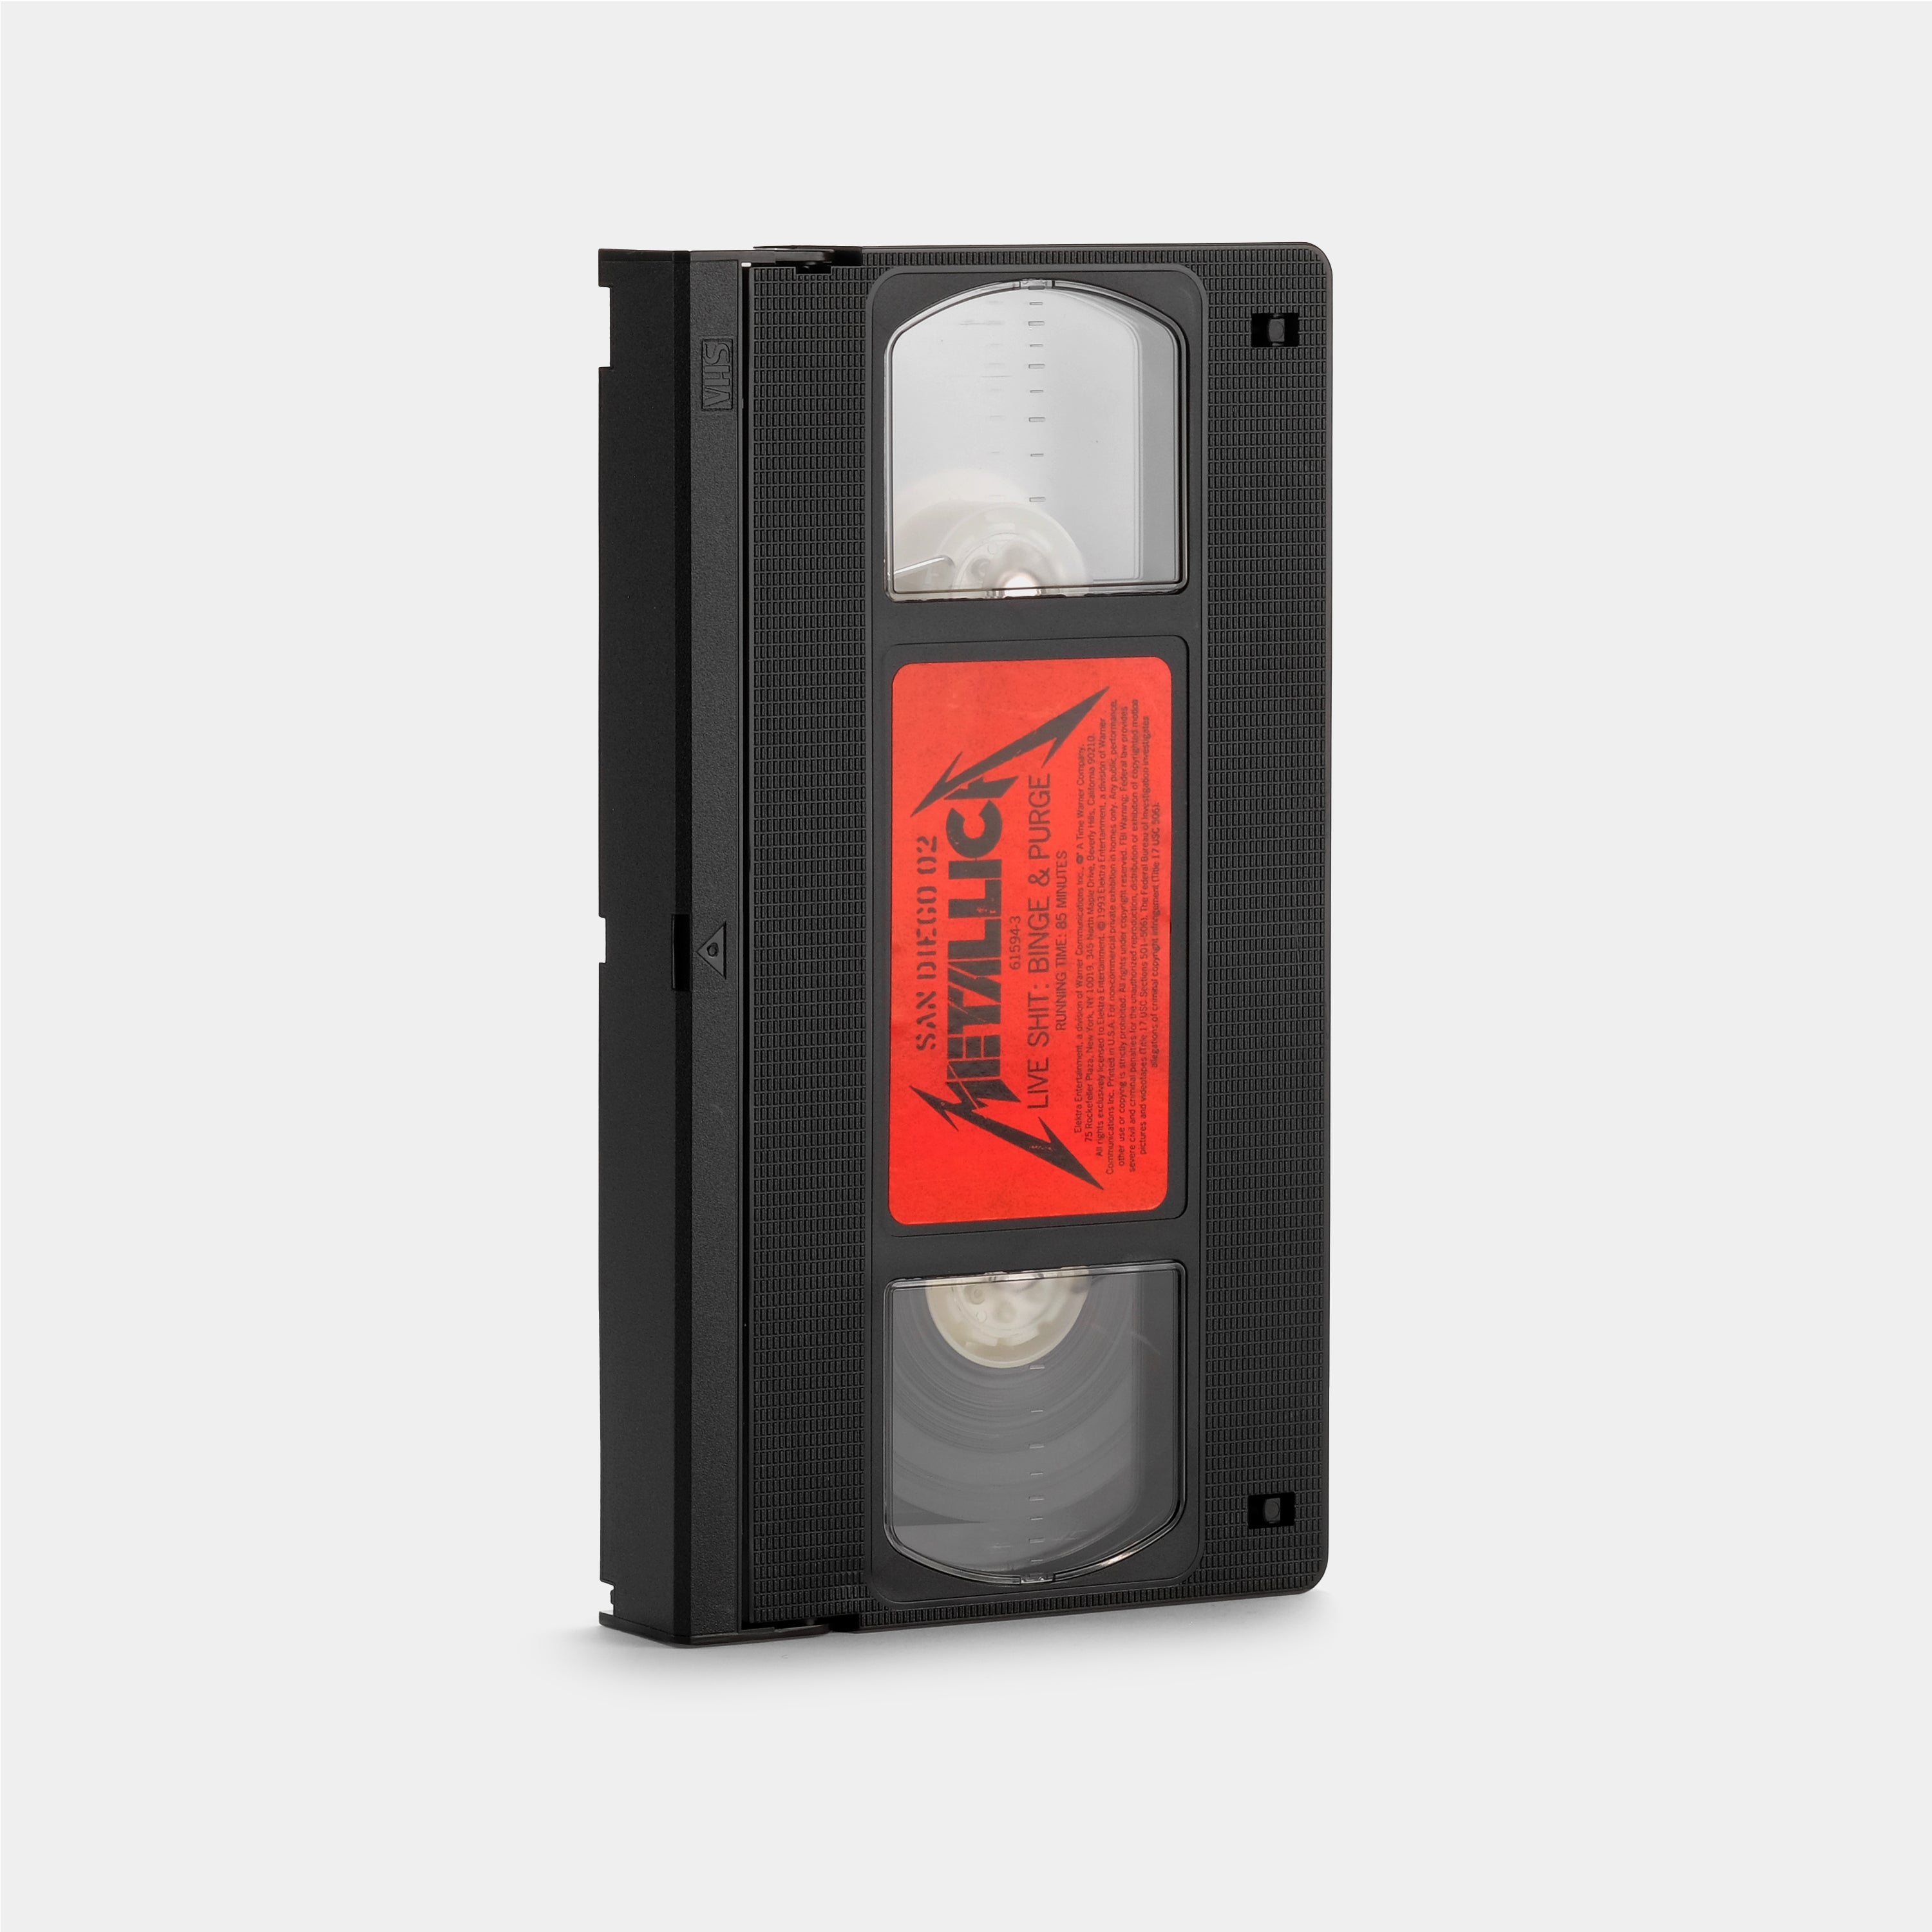 Metallica: Live Shit - Binge & Purge, San Diego 02 VHS Tape